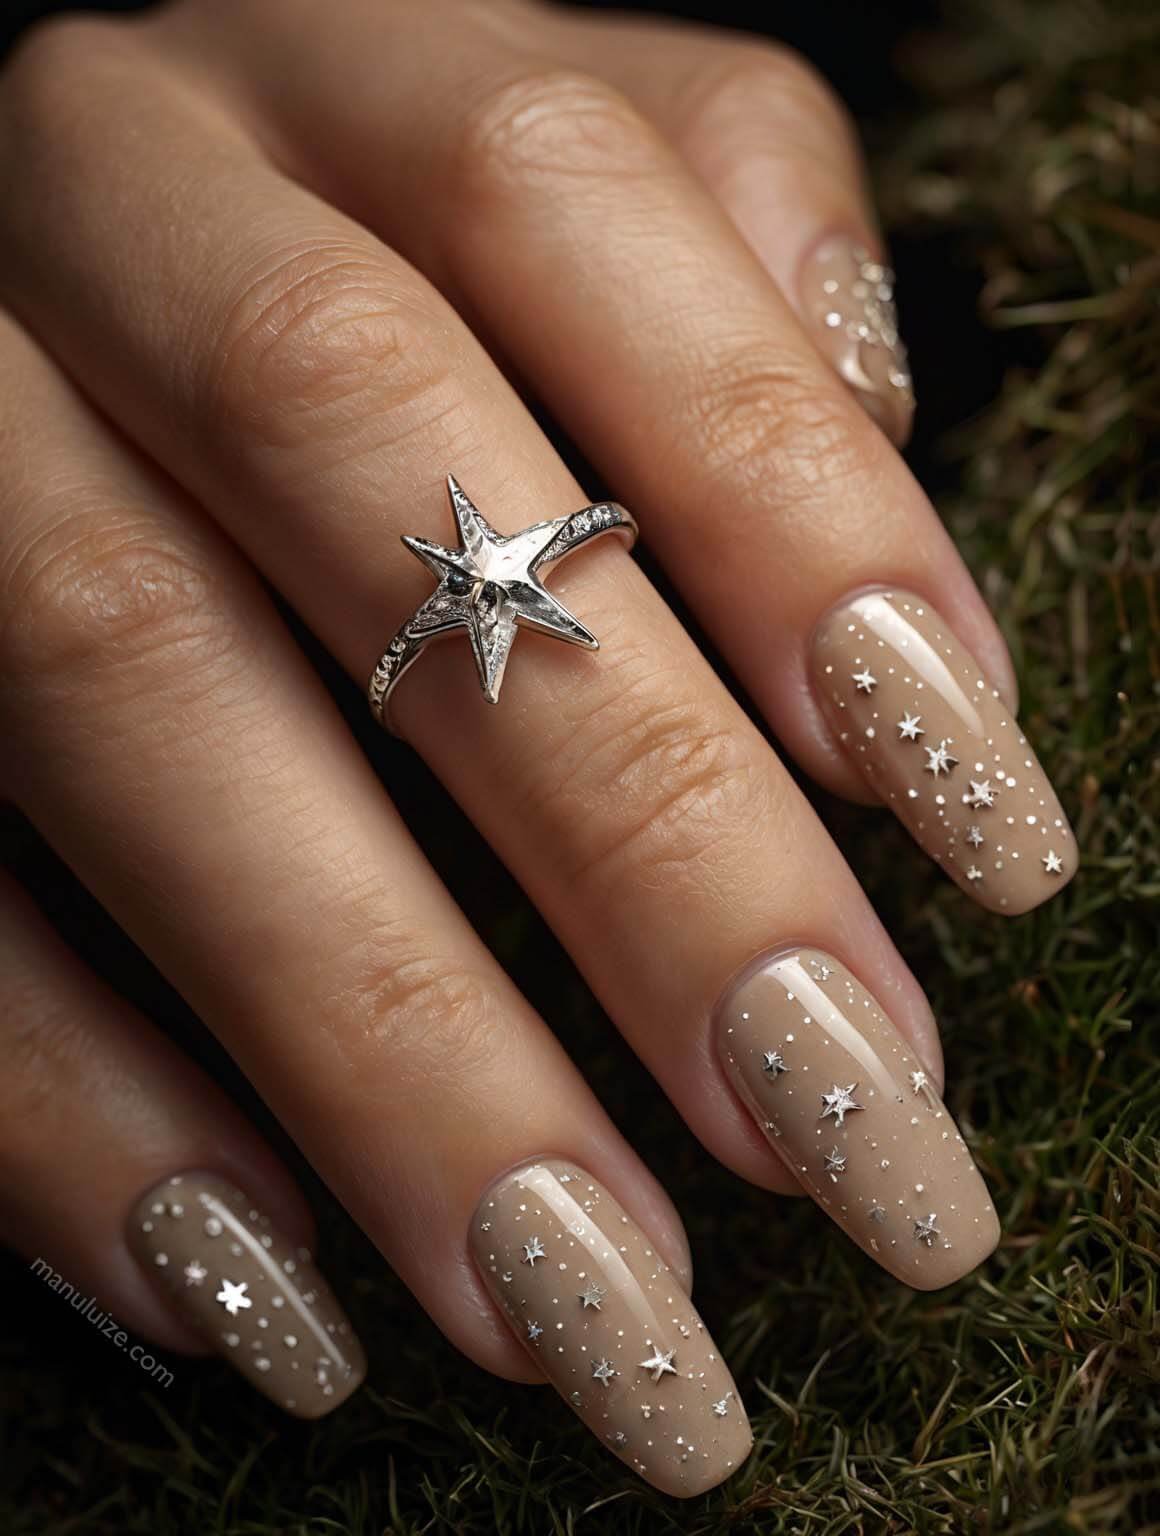 Star nail design